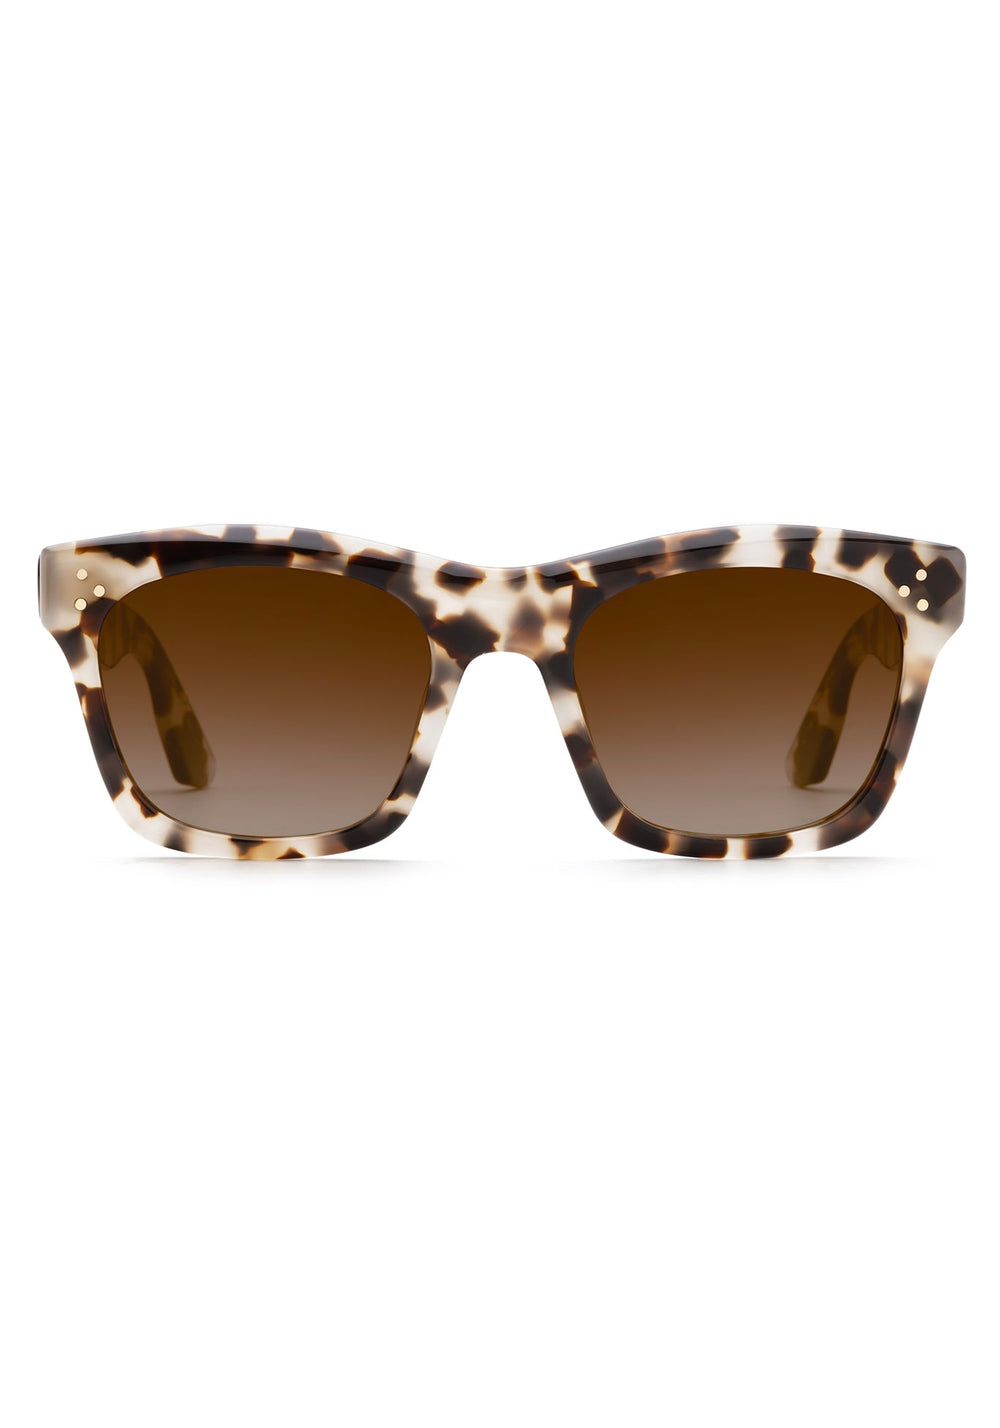 KREWE SUNGLASSES - WILLIAMS | Malt handcrafted, luxury brown tortoise shell acetate wayfarer sunglasses